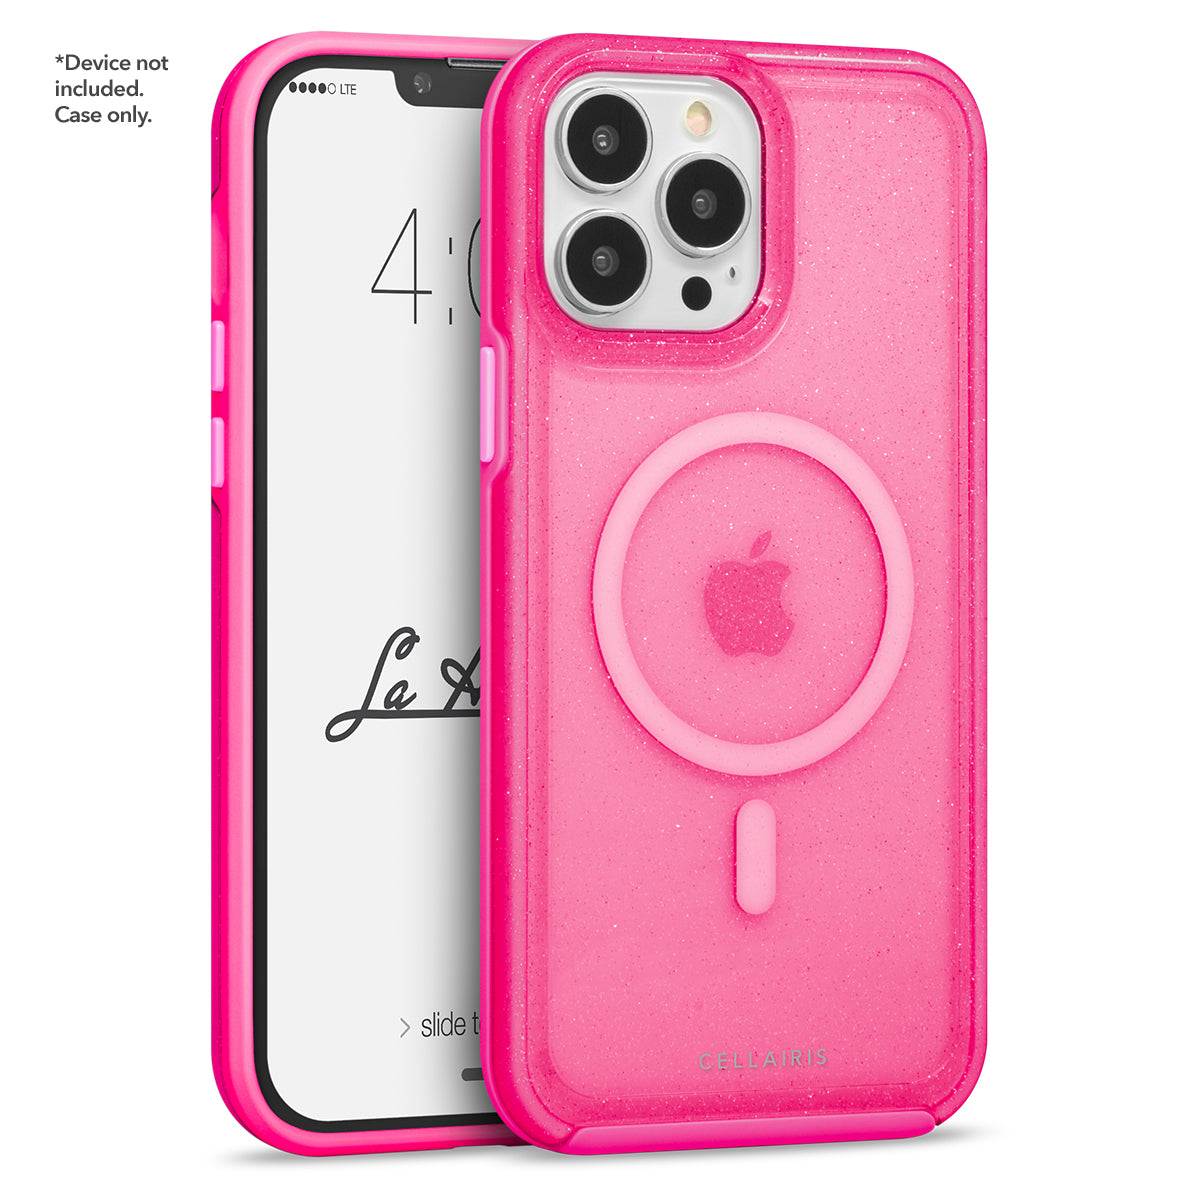 Cellairis La Hornet Glitter - Apple iPhone 14 Pro Max/ 13 Pro Max Hot Pink w/ MagSafe Phone Case